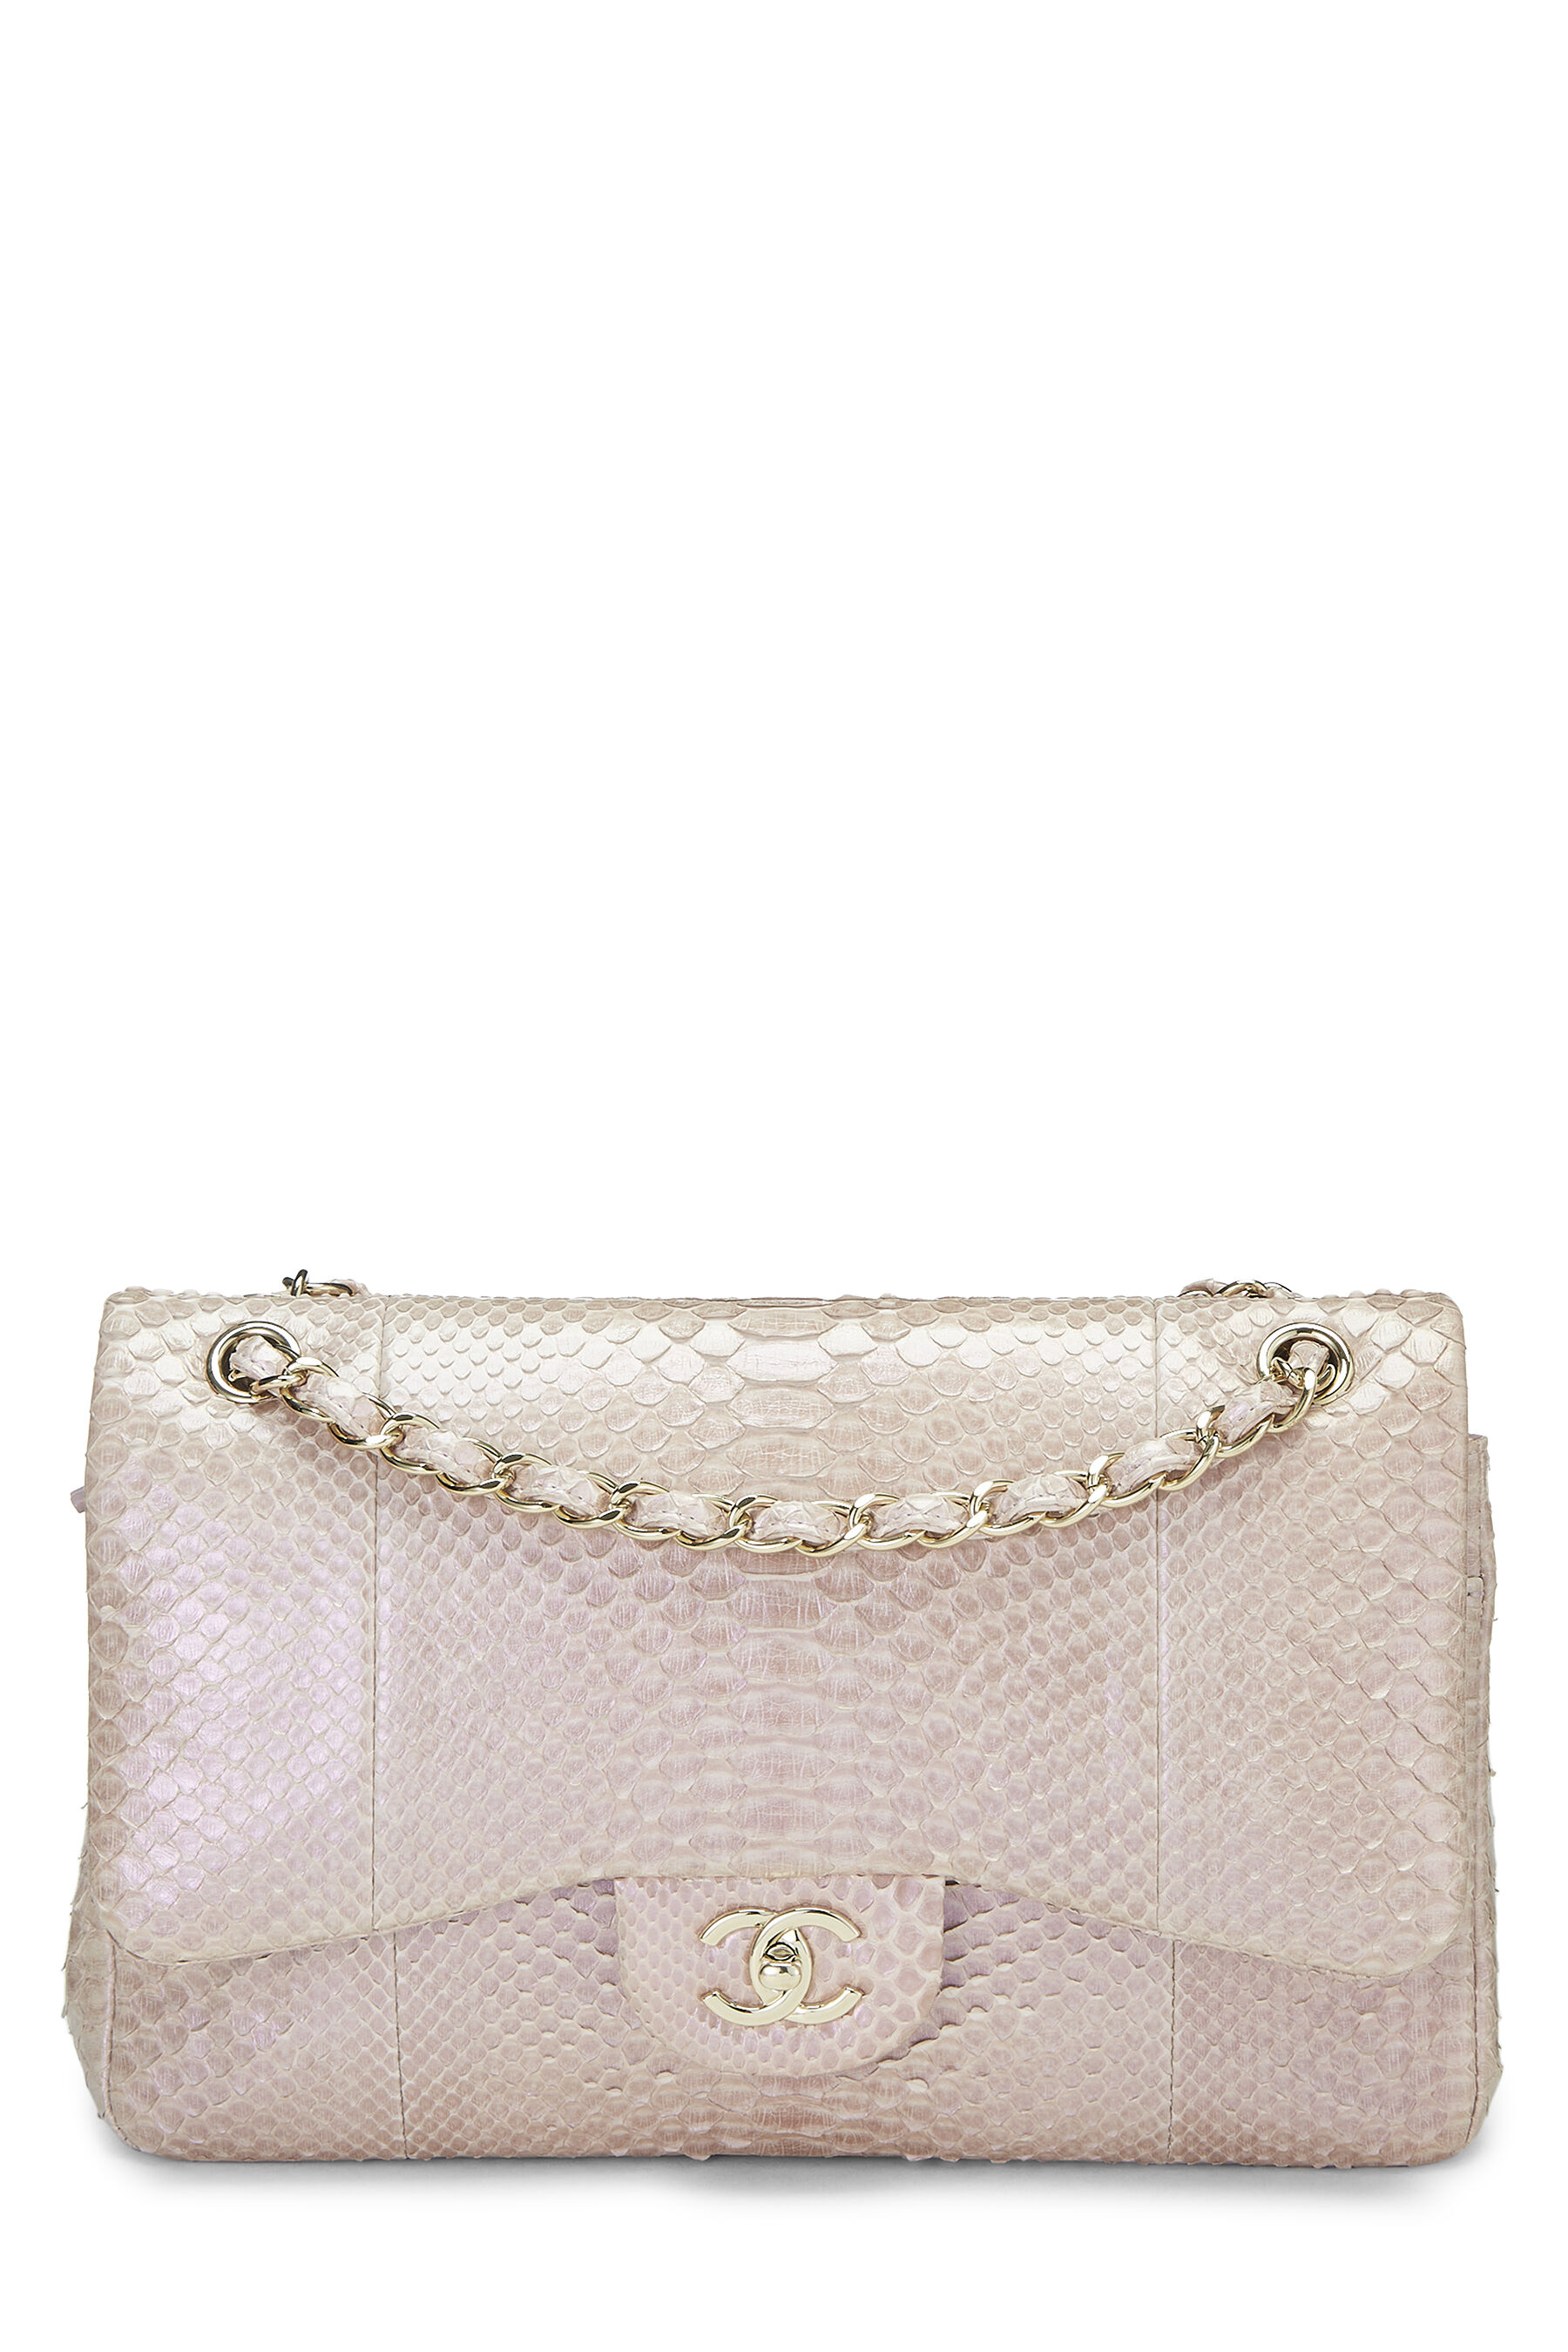 Chanel - Iridescent Pink Python Classic Double Flap Jumbo